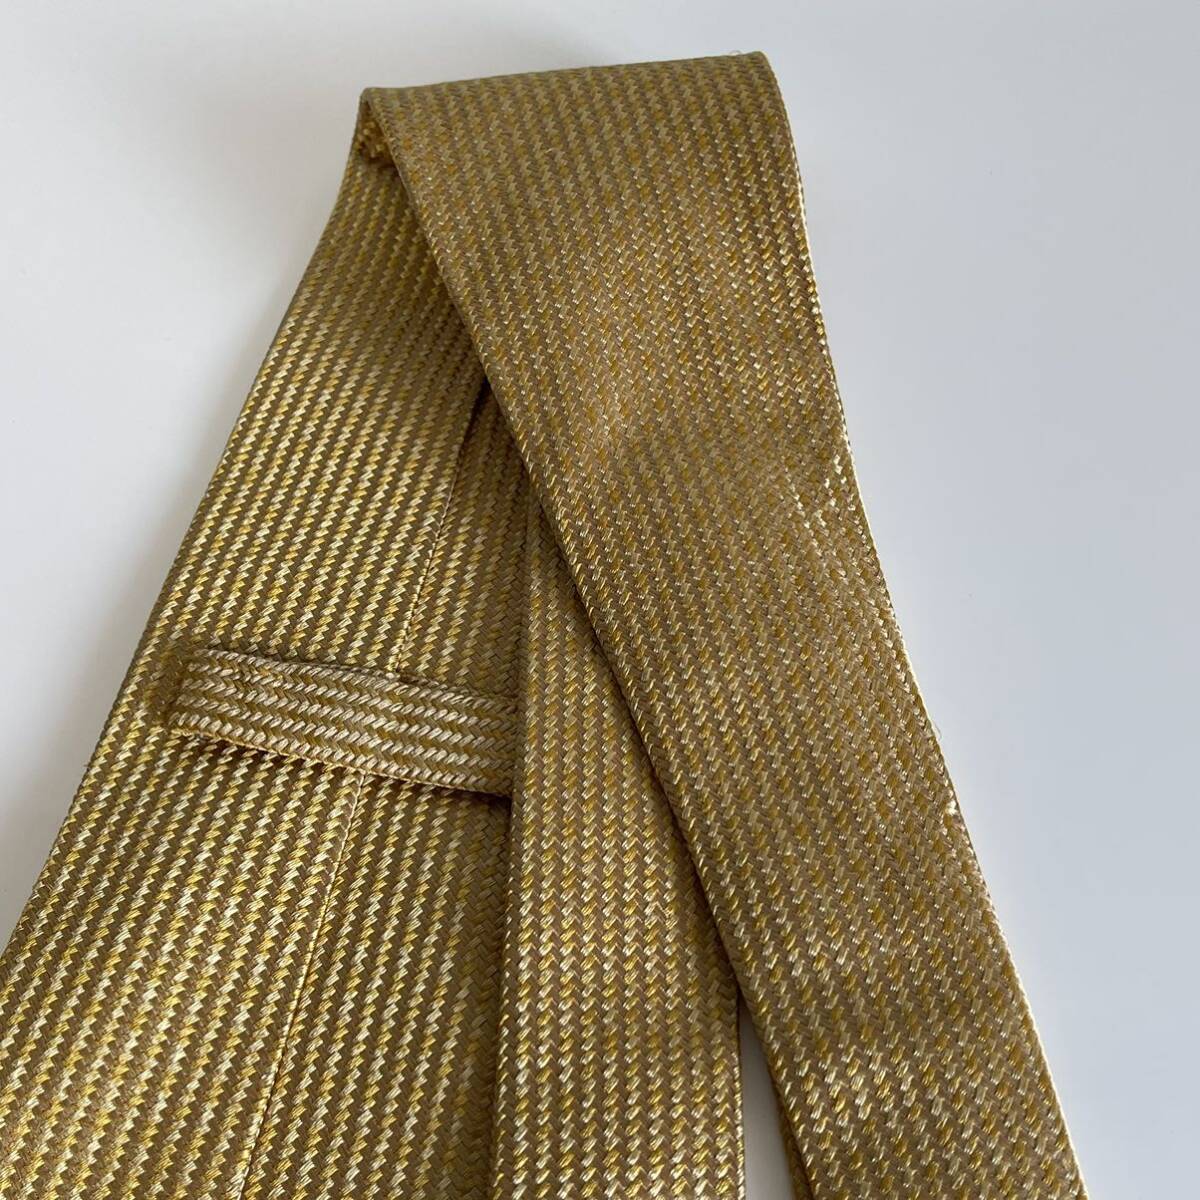 Vivienne Westwood( Vivienne Westwood ) Gold one отметка o-b галстук 